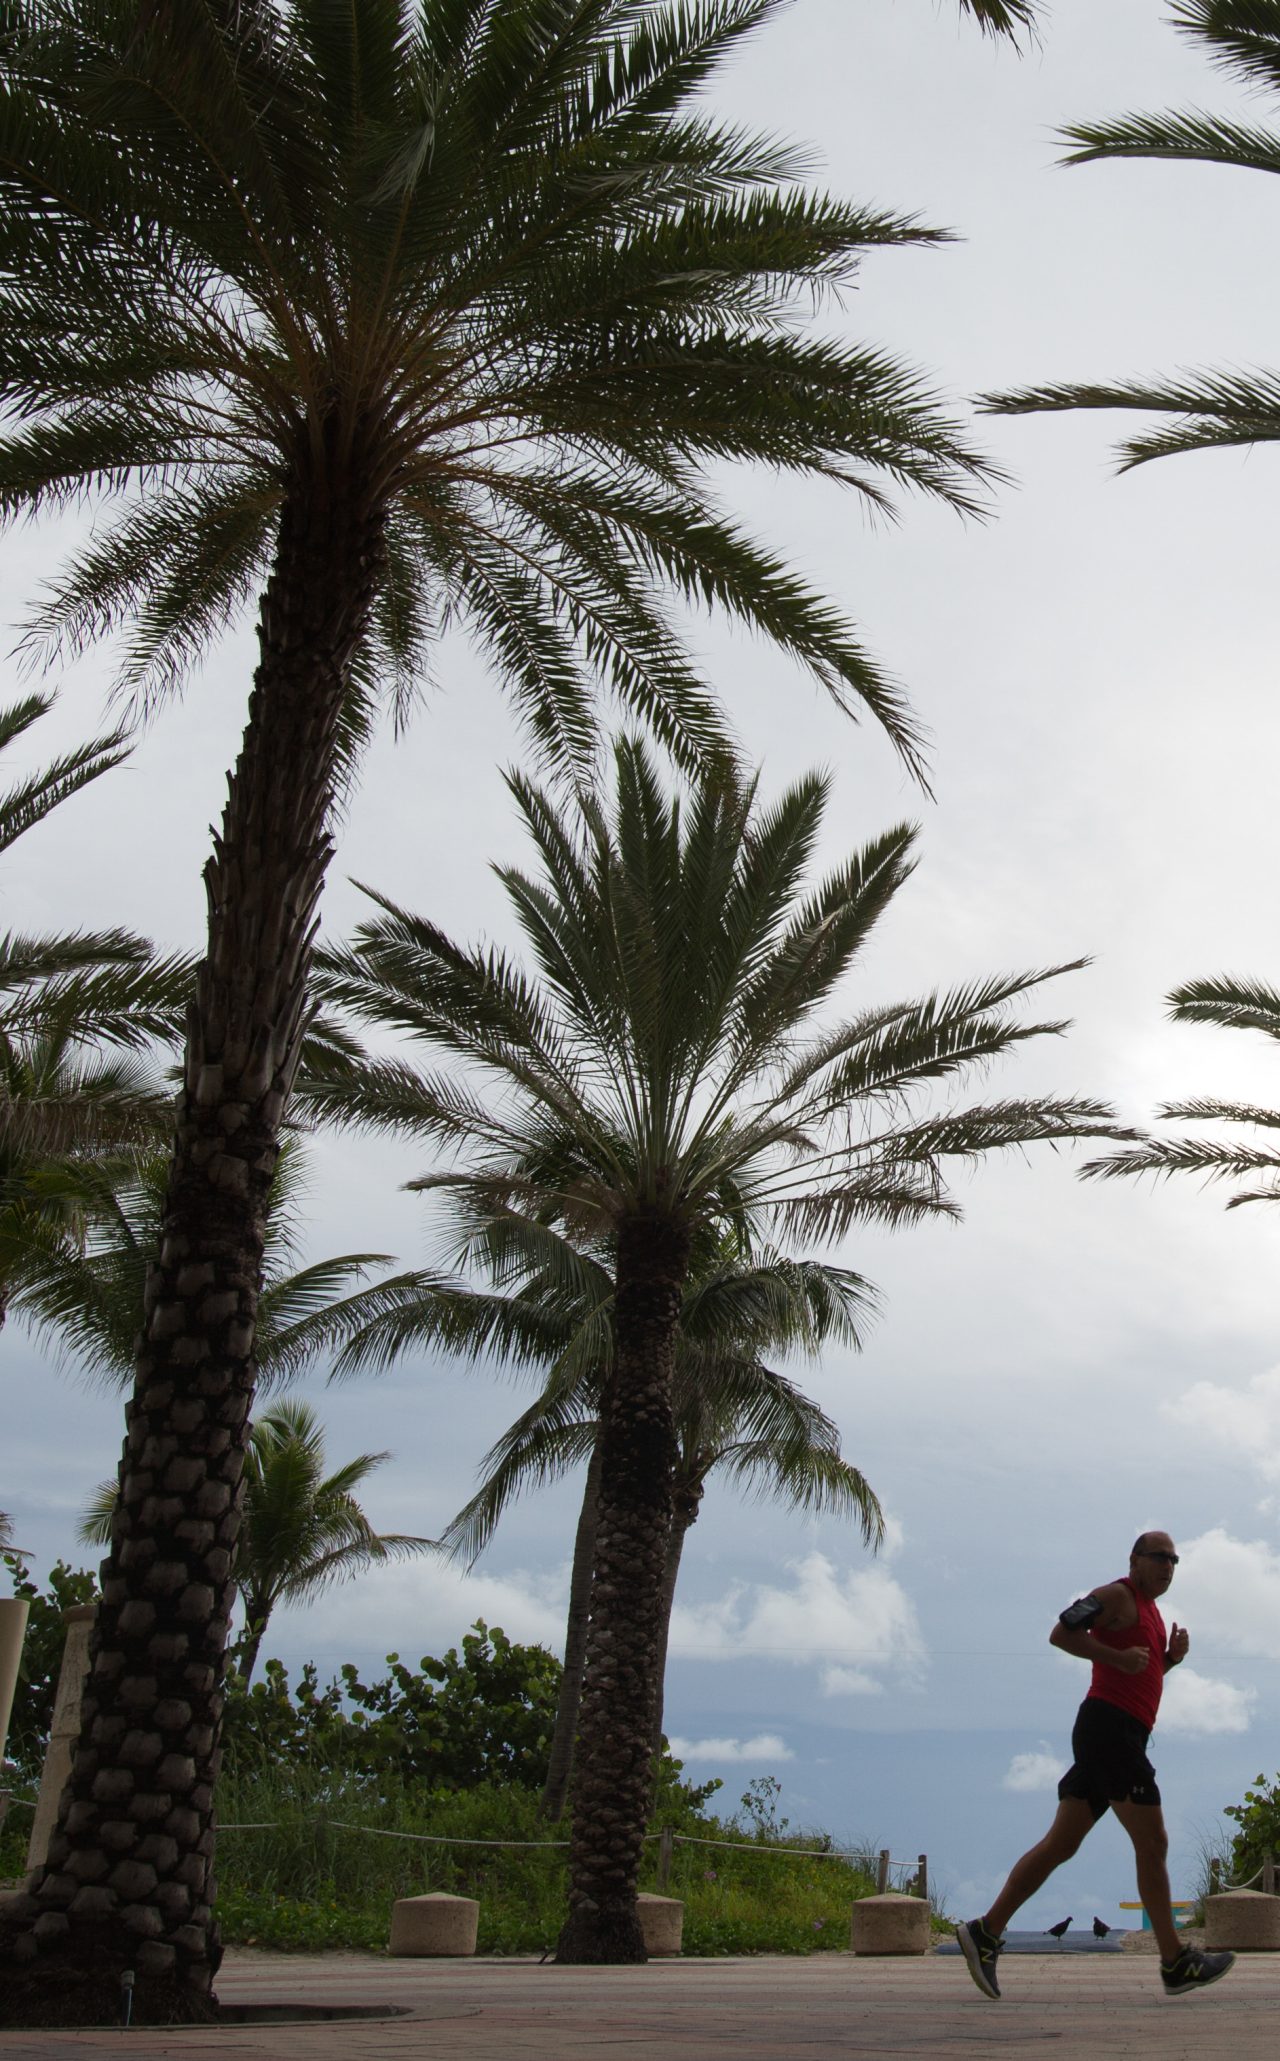 RWJF COH Miami. August 29-31, 2016.  Pictures of people exercising (walk, run, bike) along Miami Beach neighborhood area.